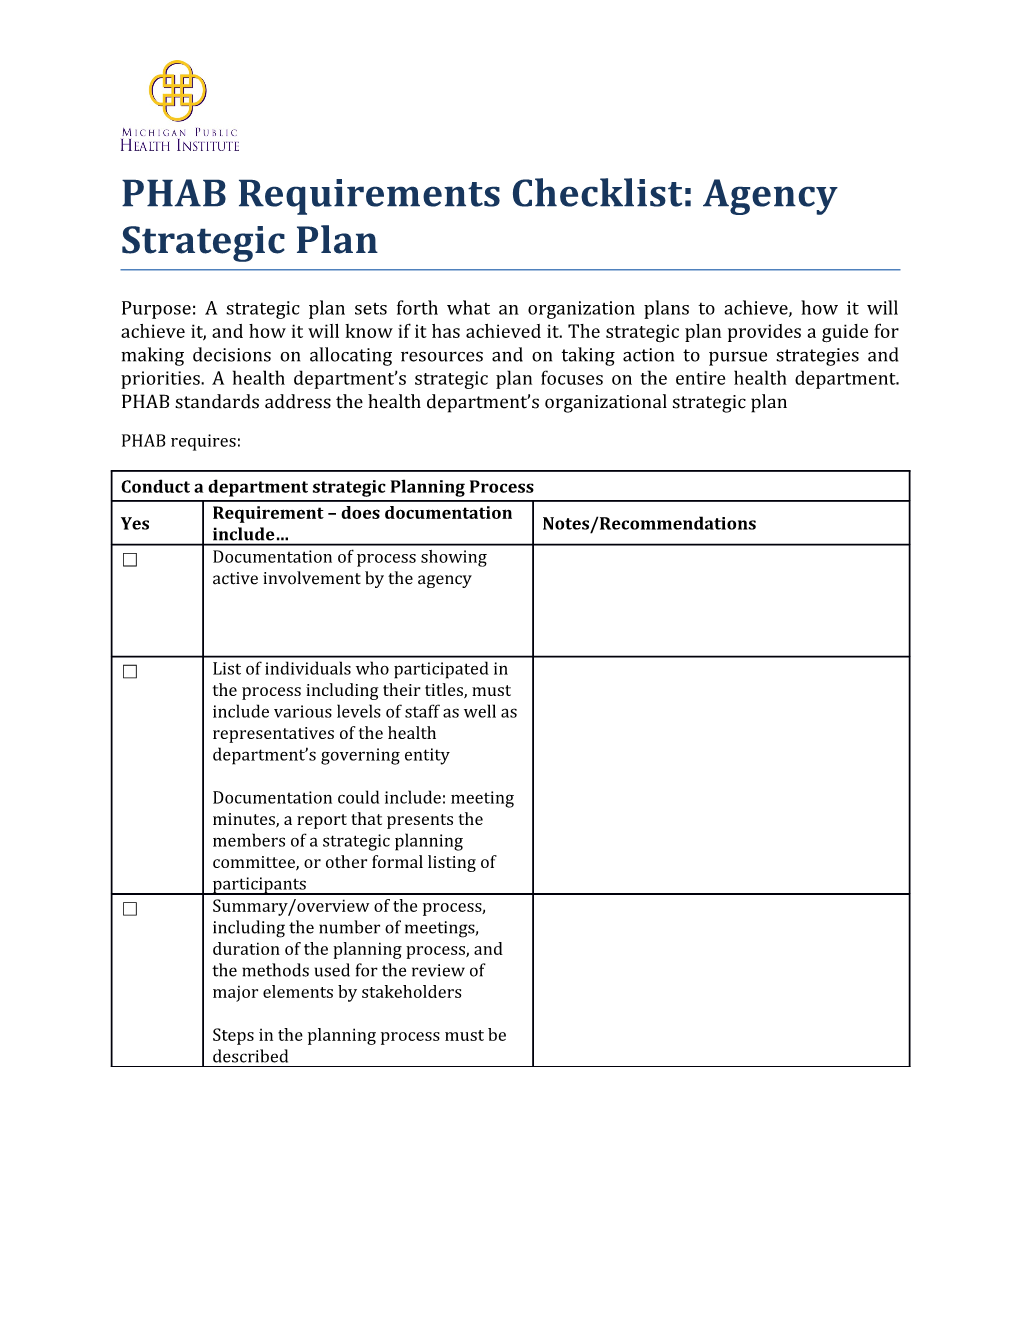 PHAB Requirements Checklist: Agency Strategic Plan